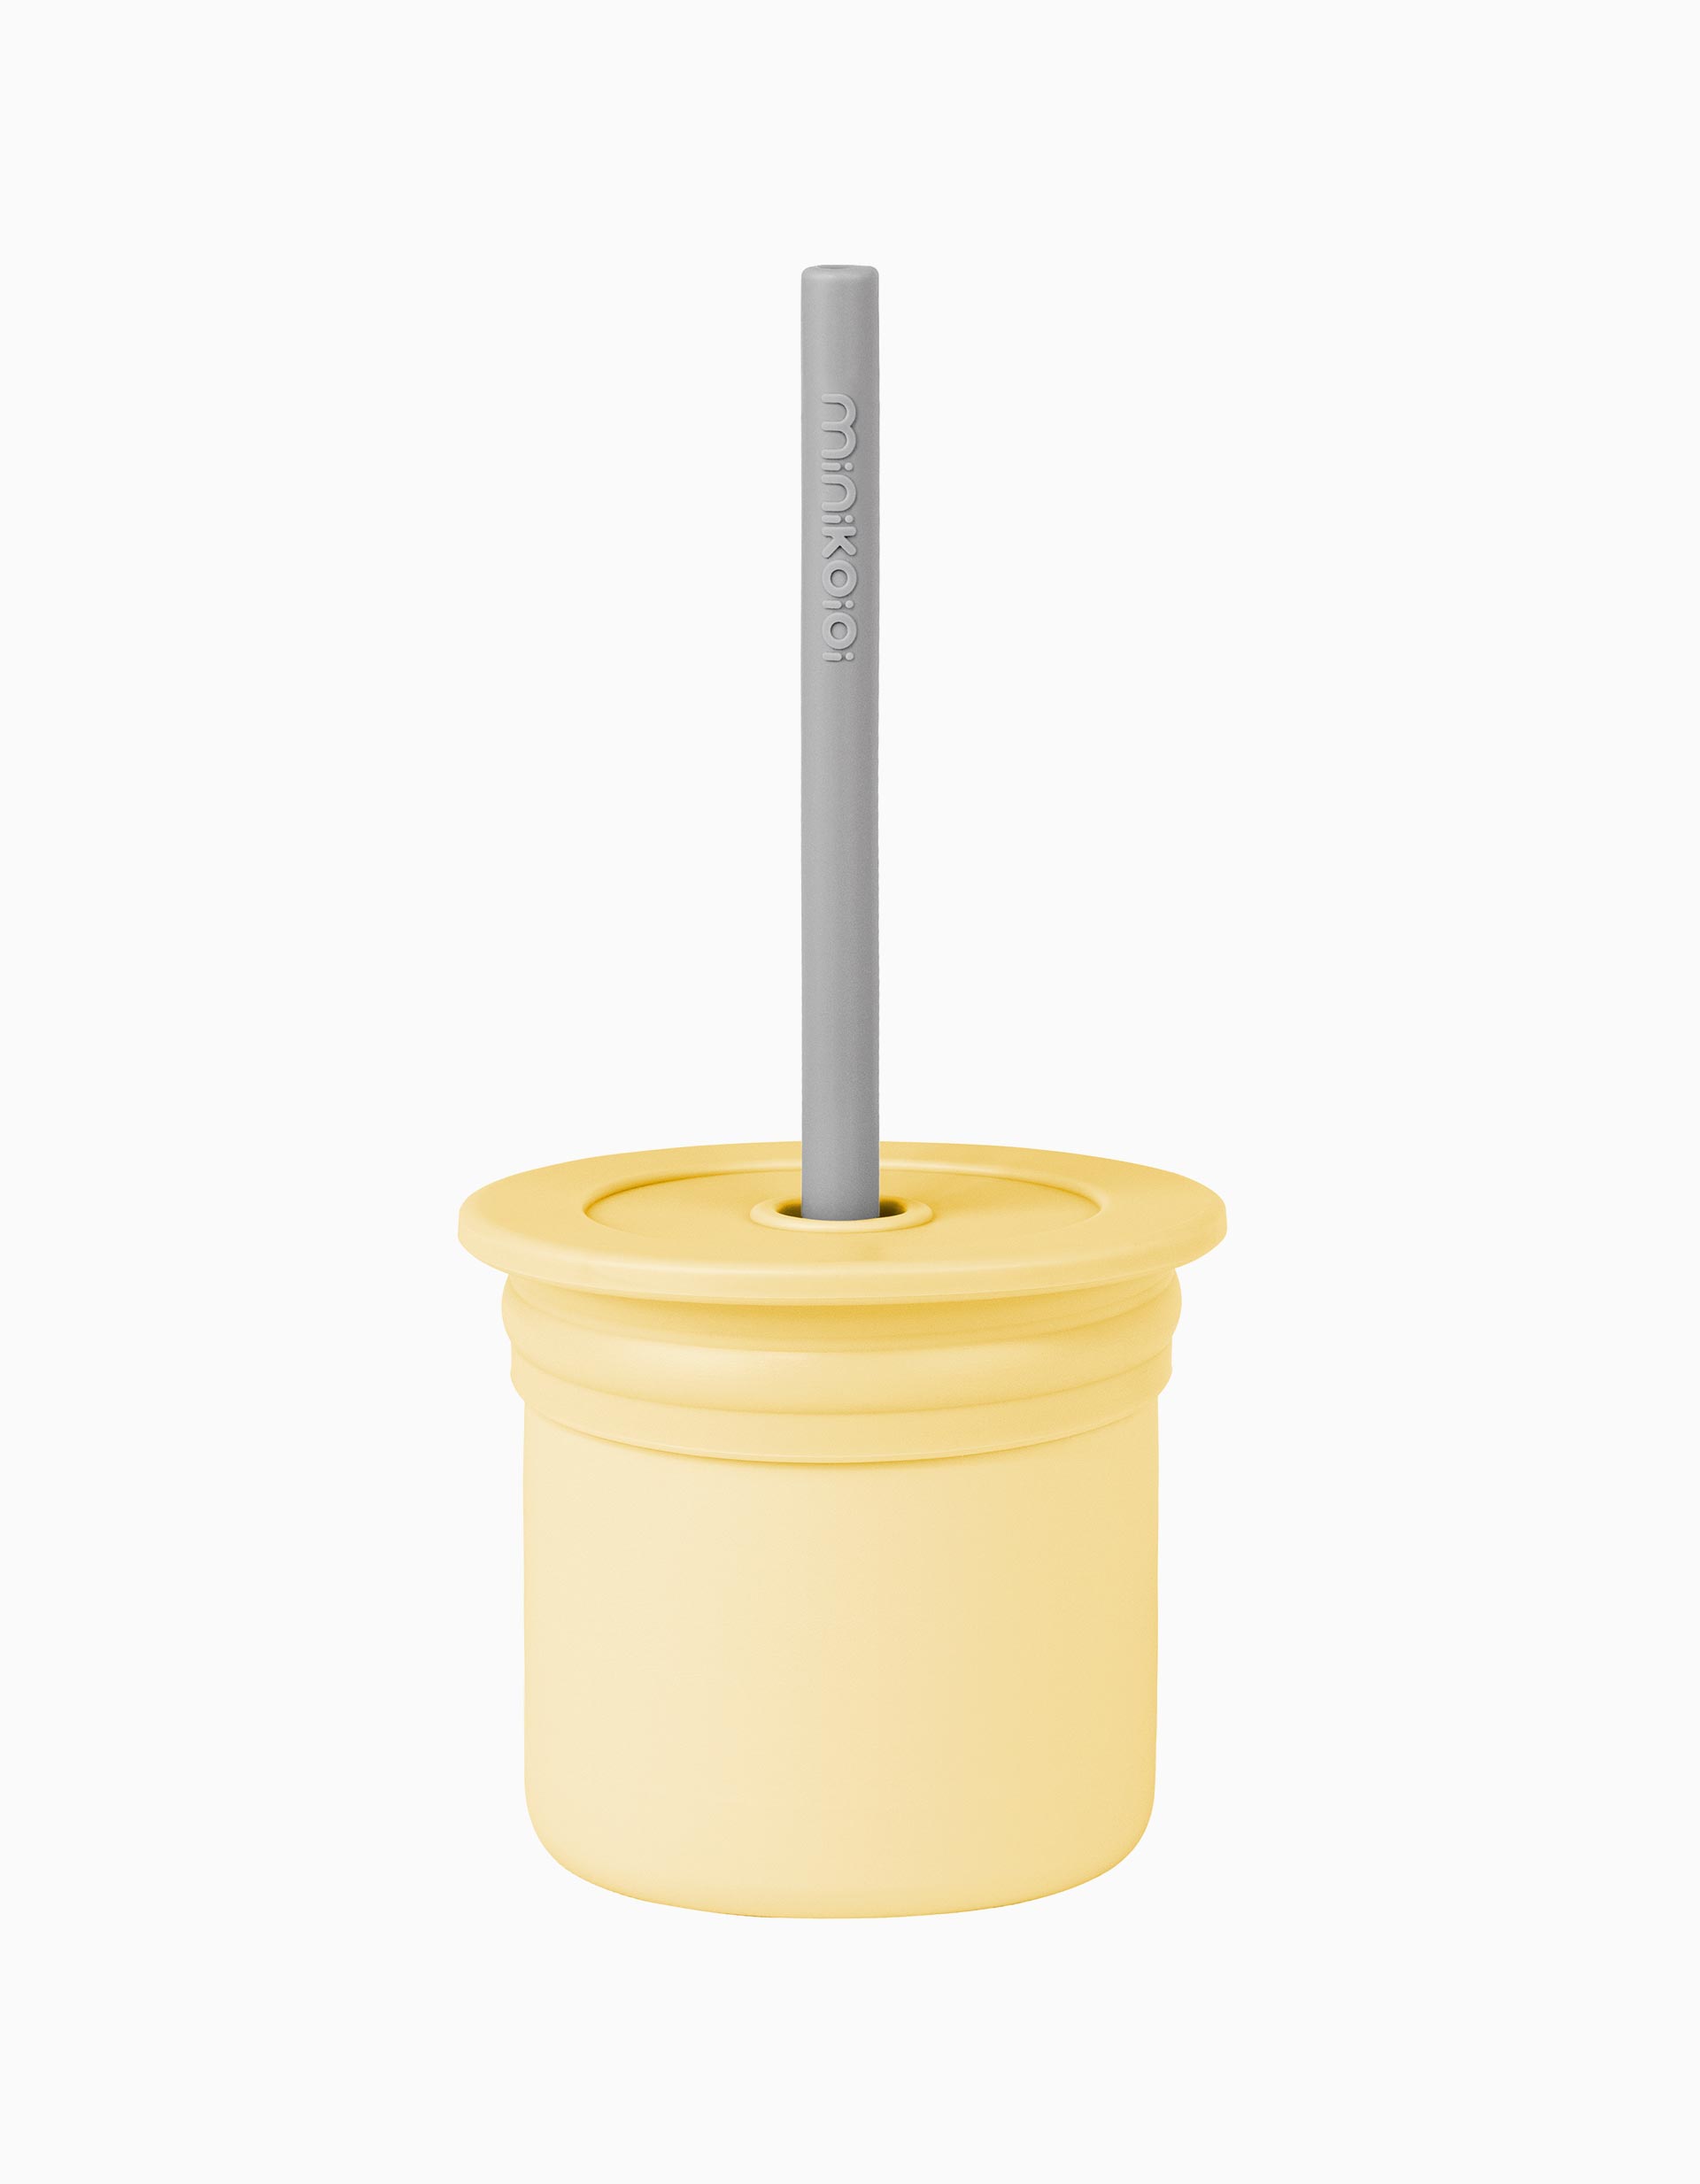 Vaso de Snack con Pajita Minikoioi Yellow/Grey 6M+